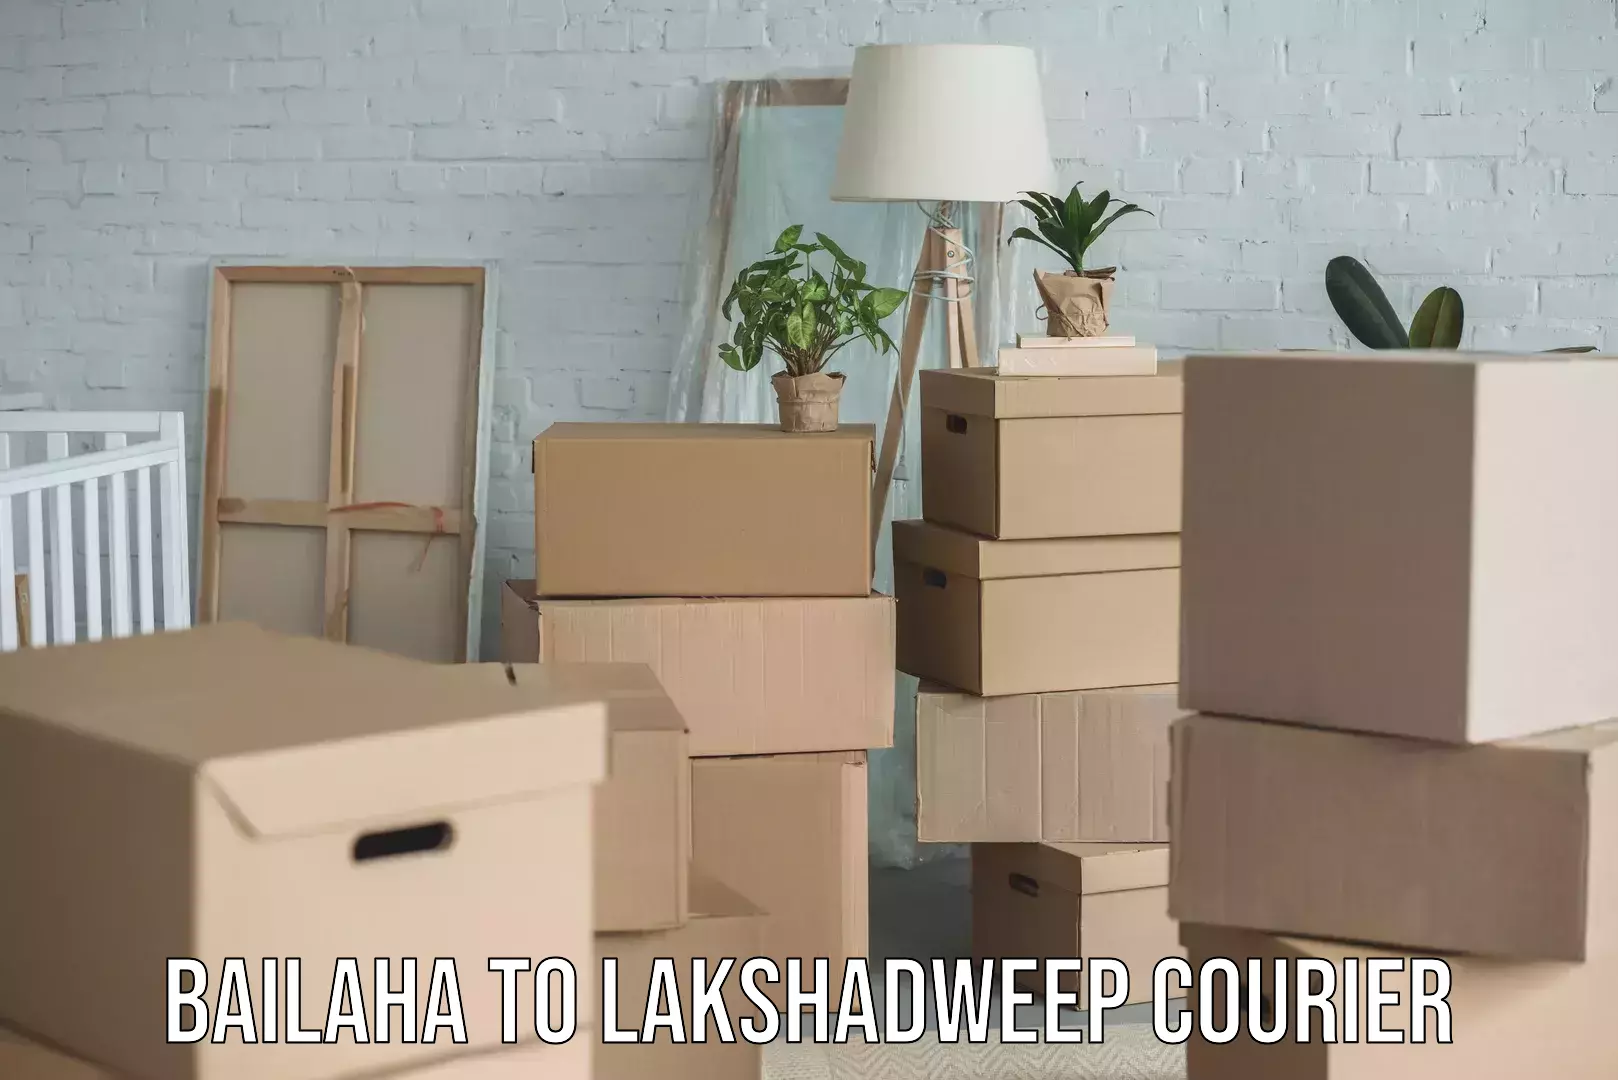 Courier service partnerships Bailaha to Lakshadweep